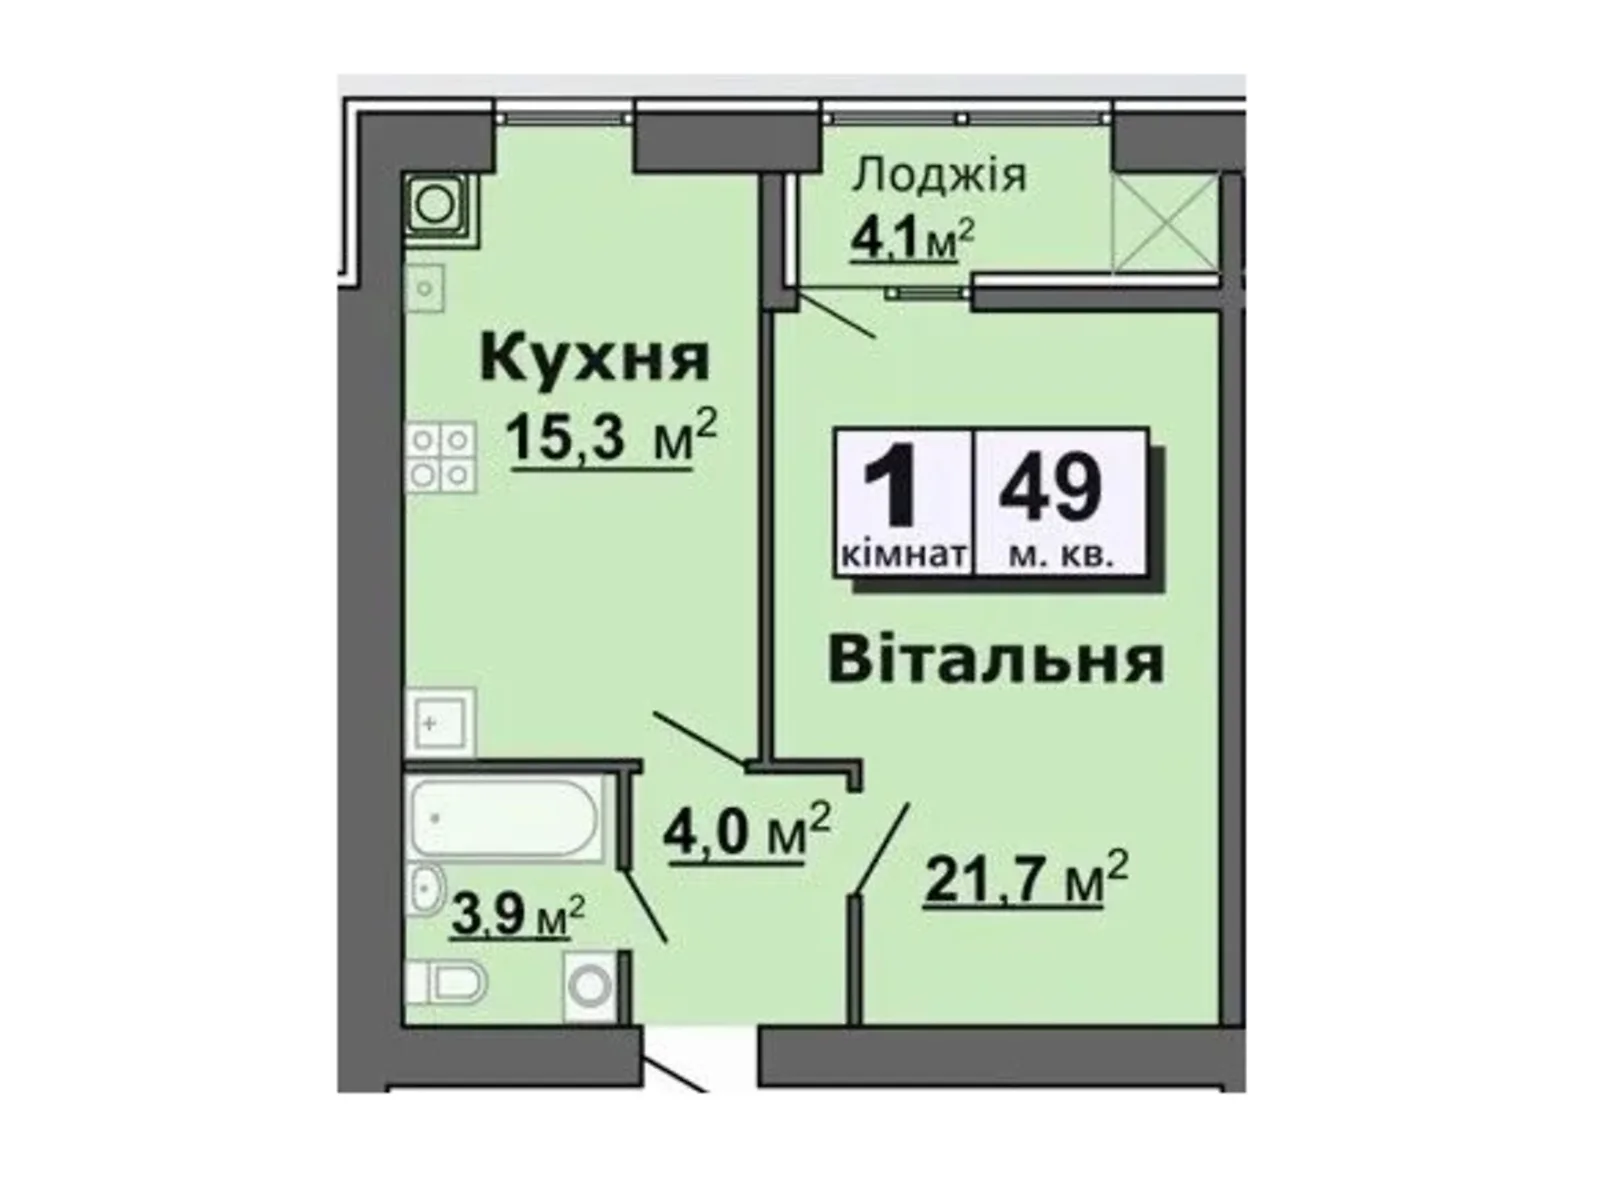 1-кімнатна квартира 49 кв. м у Луцьку, цена: 41754 $